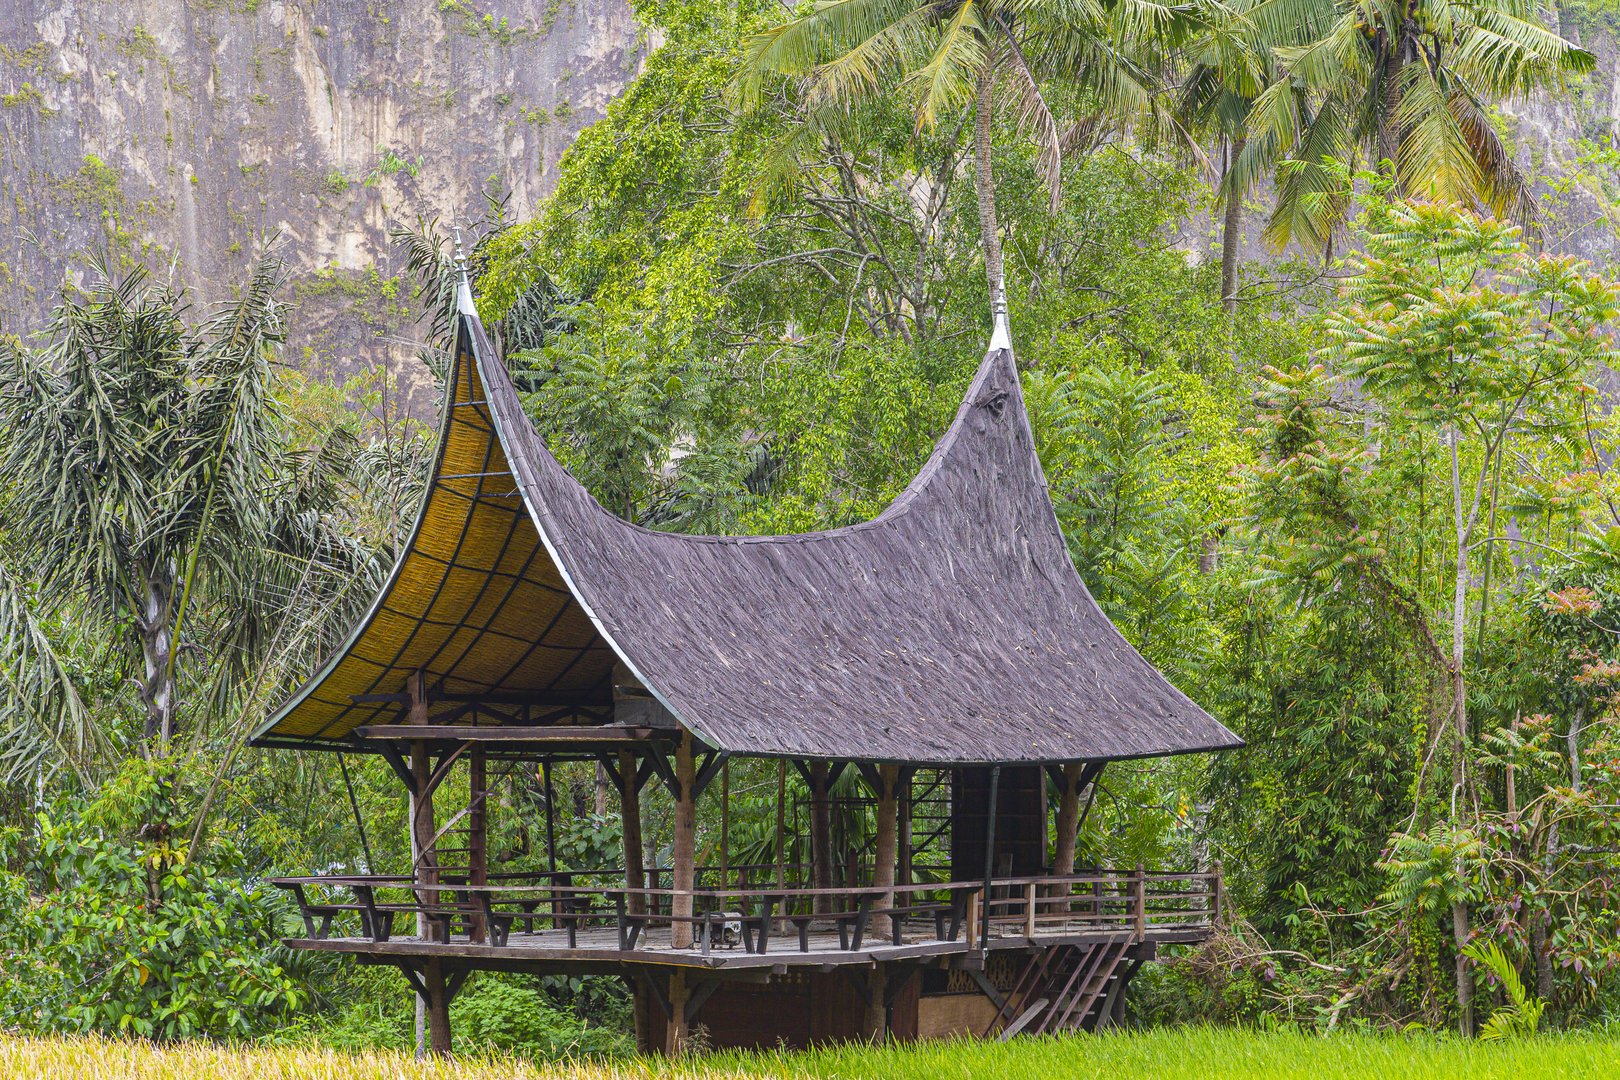 Architektur auf Sumatra